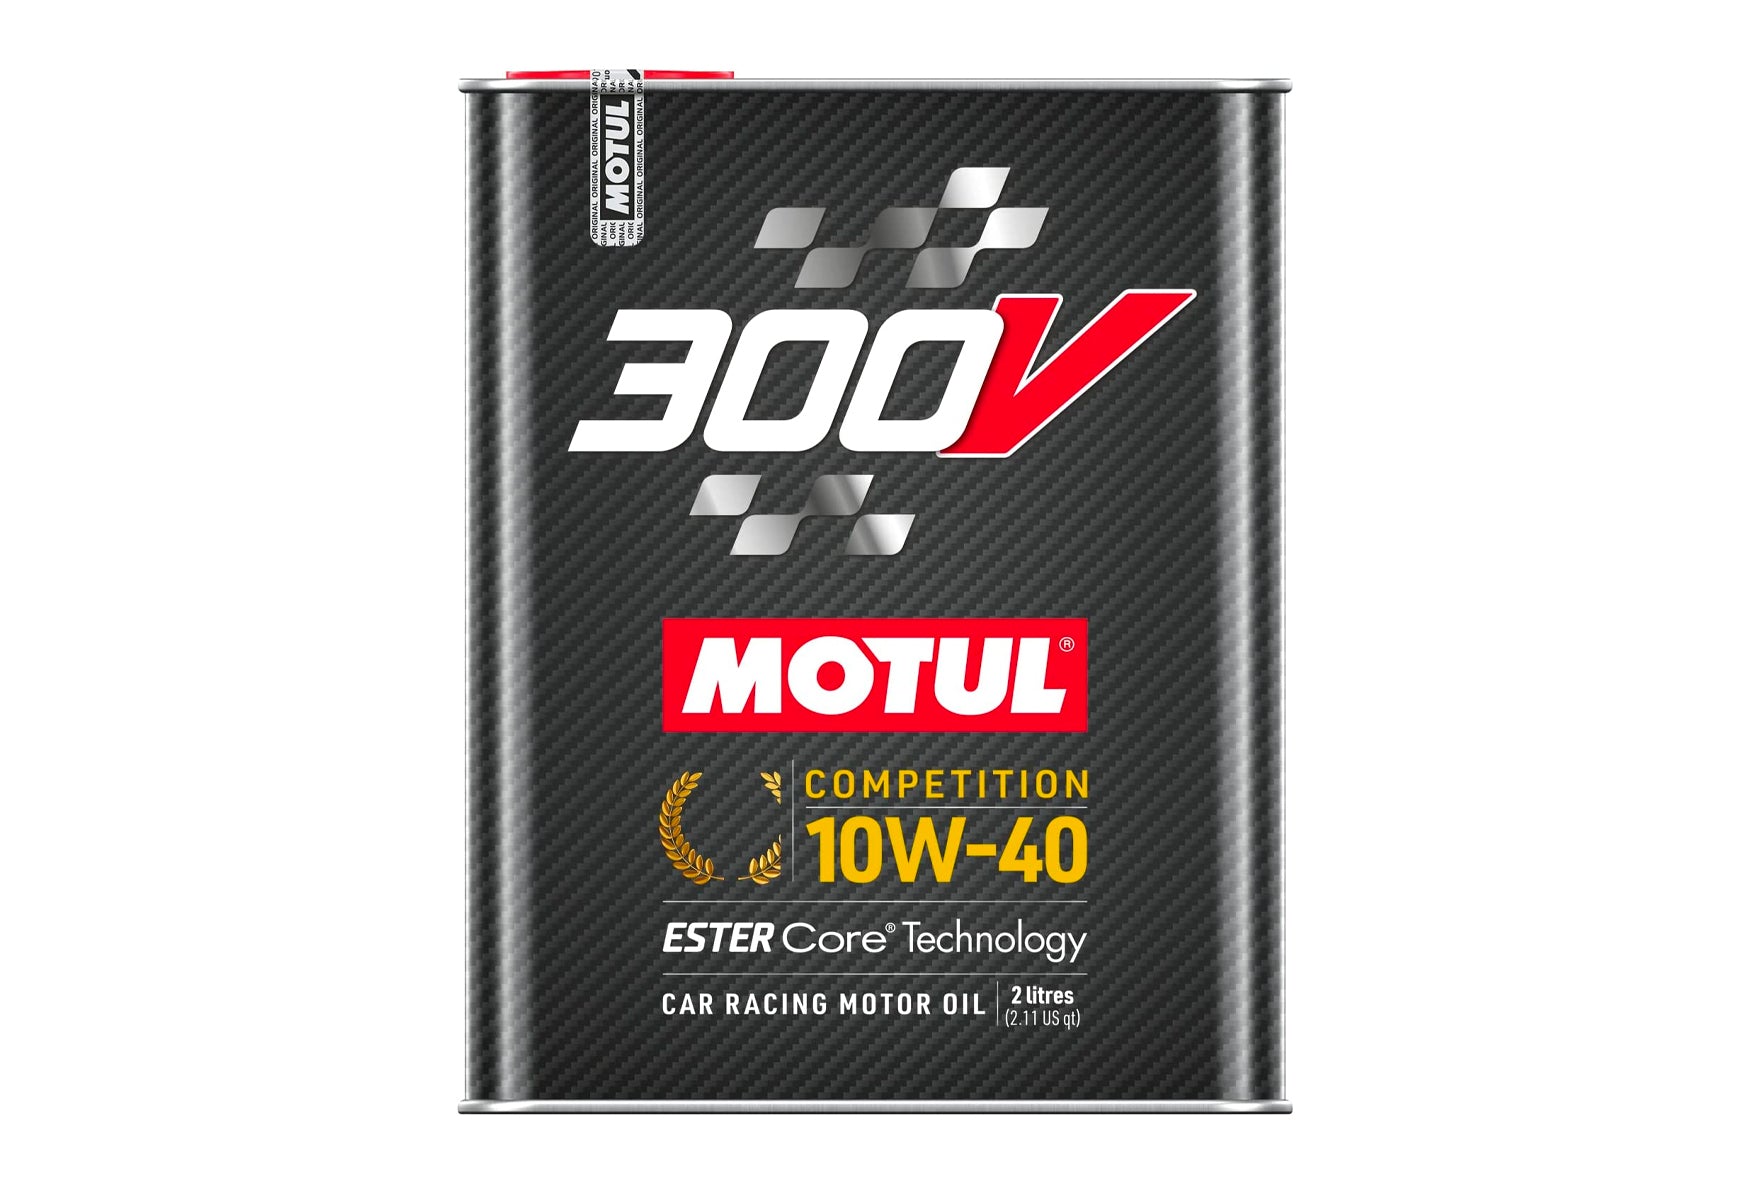 Motul 300V FL ROAD RACING 100%Synthetic 10W40 40L Engine Motor Oil 10 x 4L